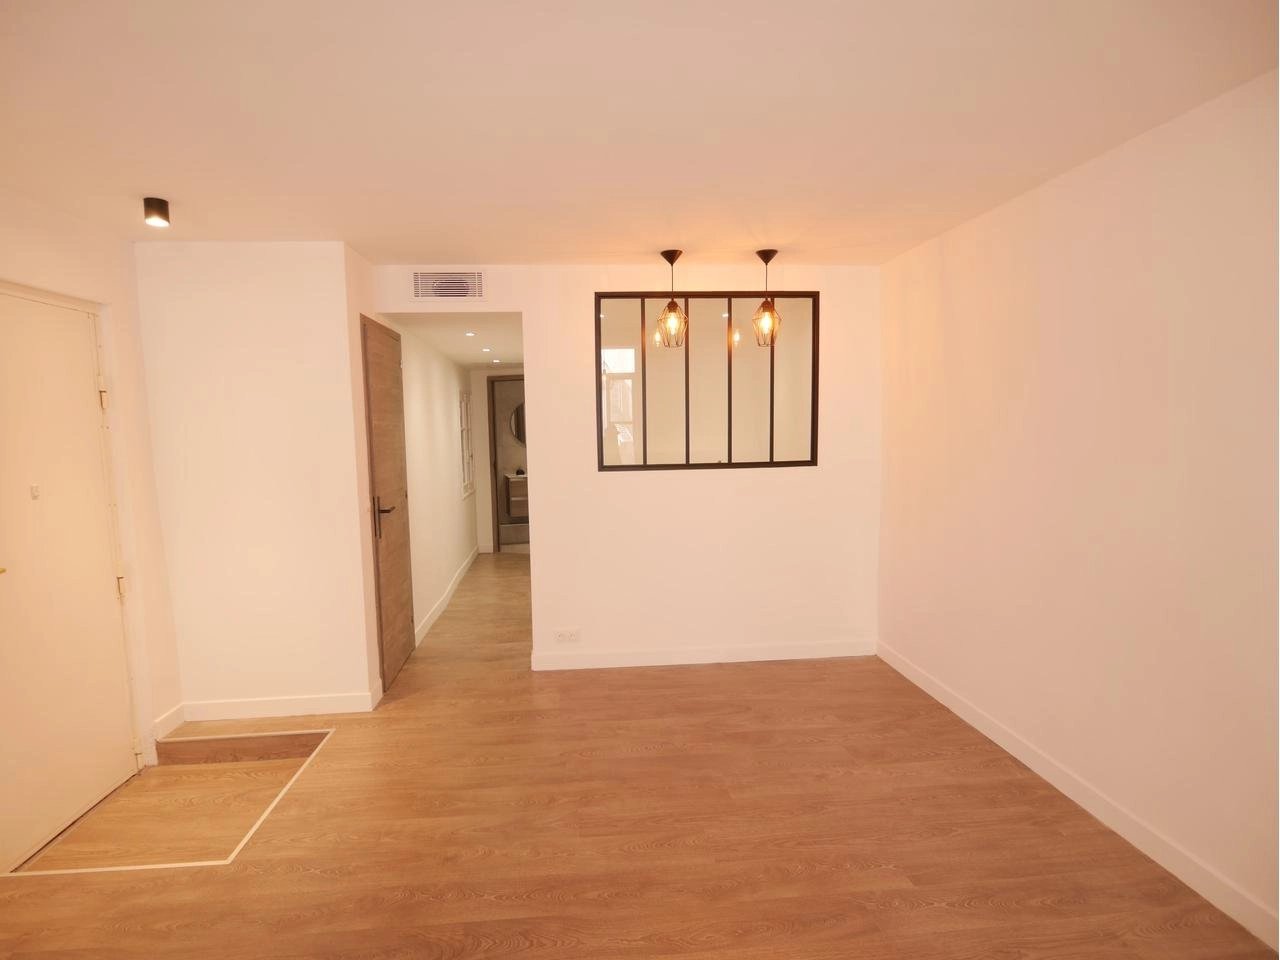 Appartement  2 Locali 42.94m2  In vendita   255 000 €